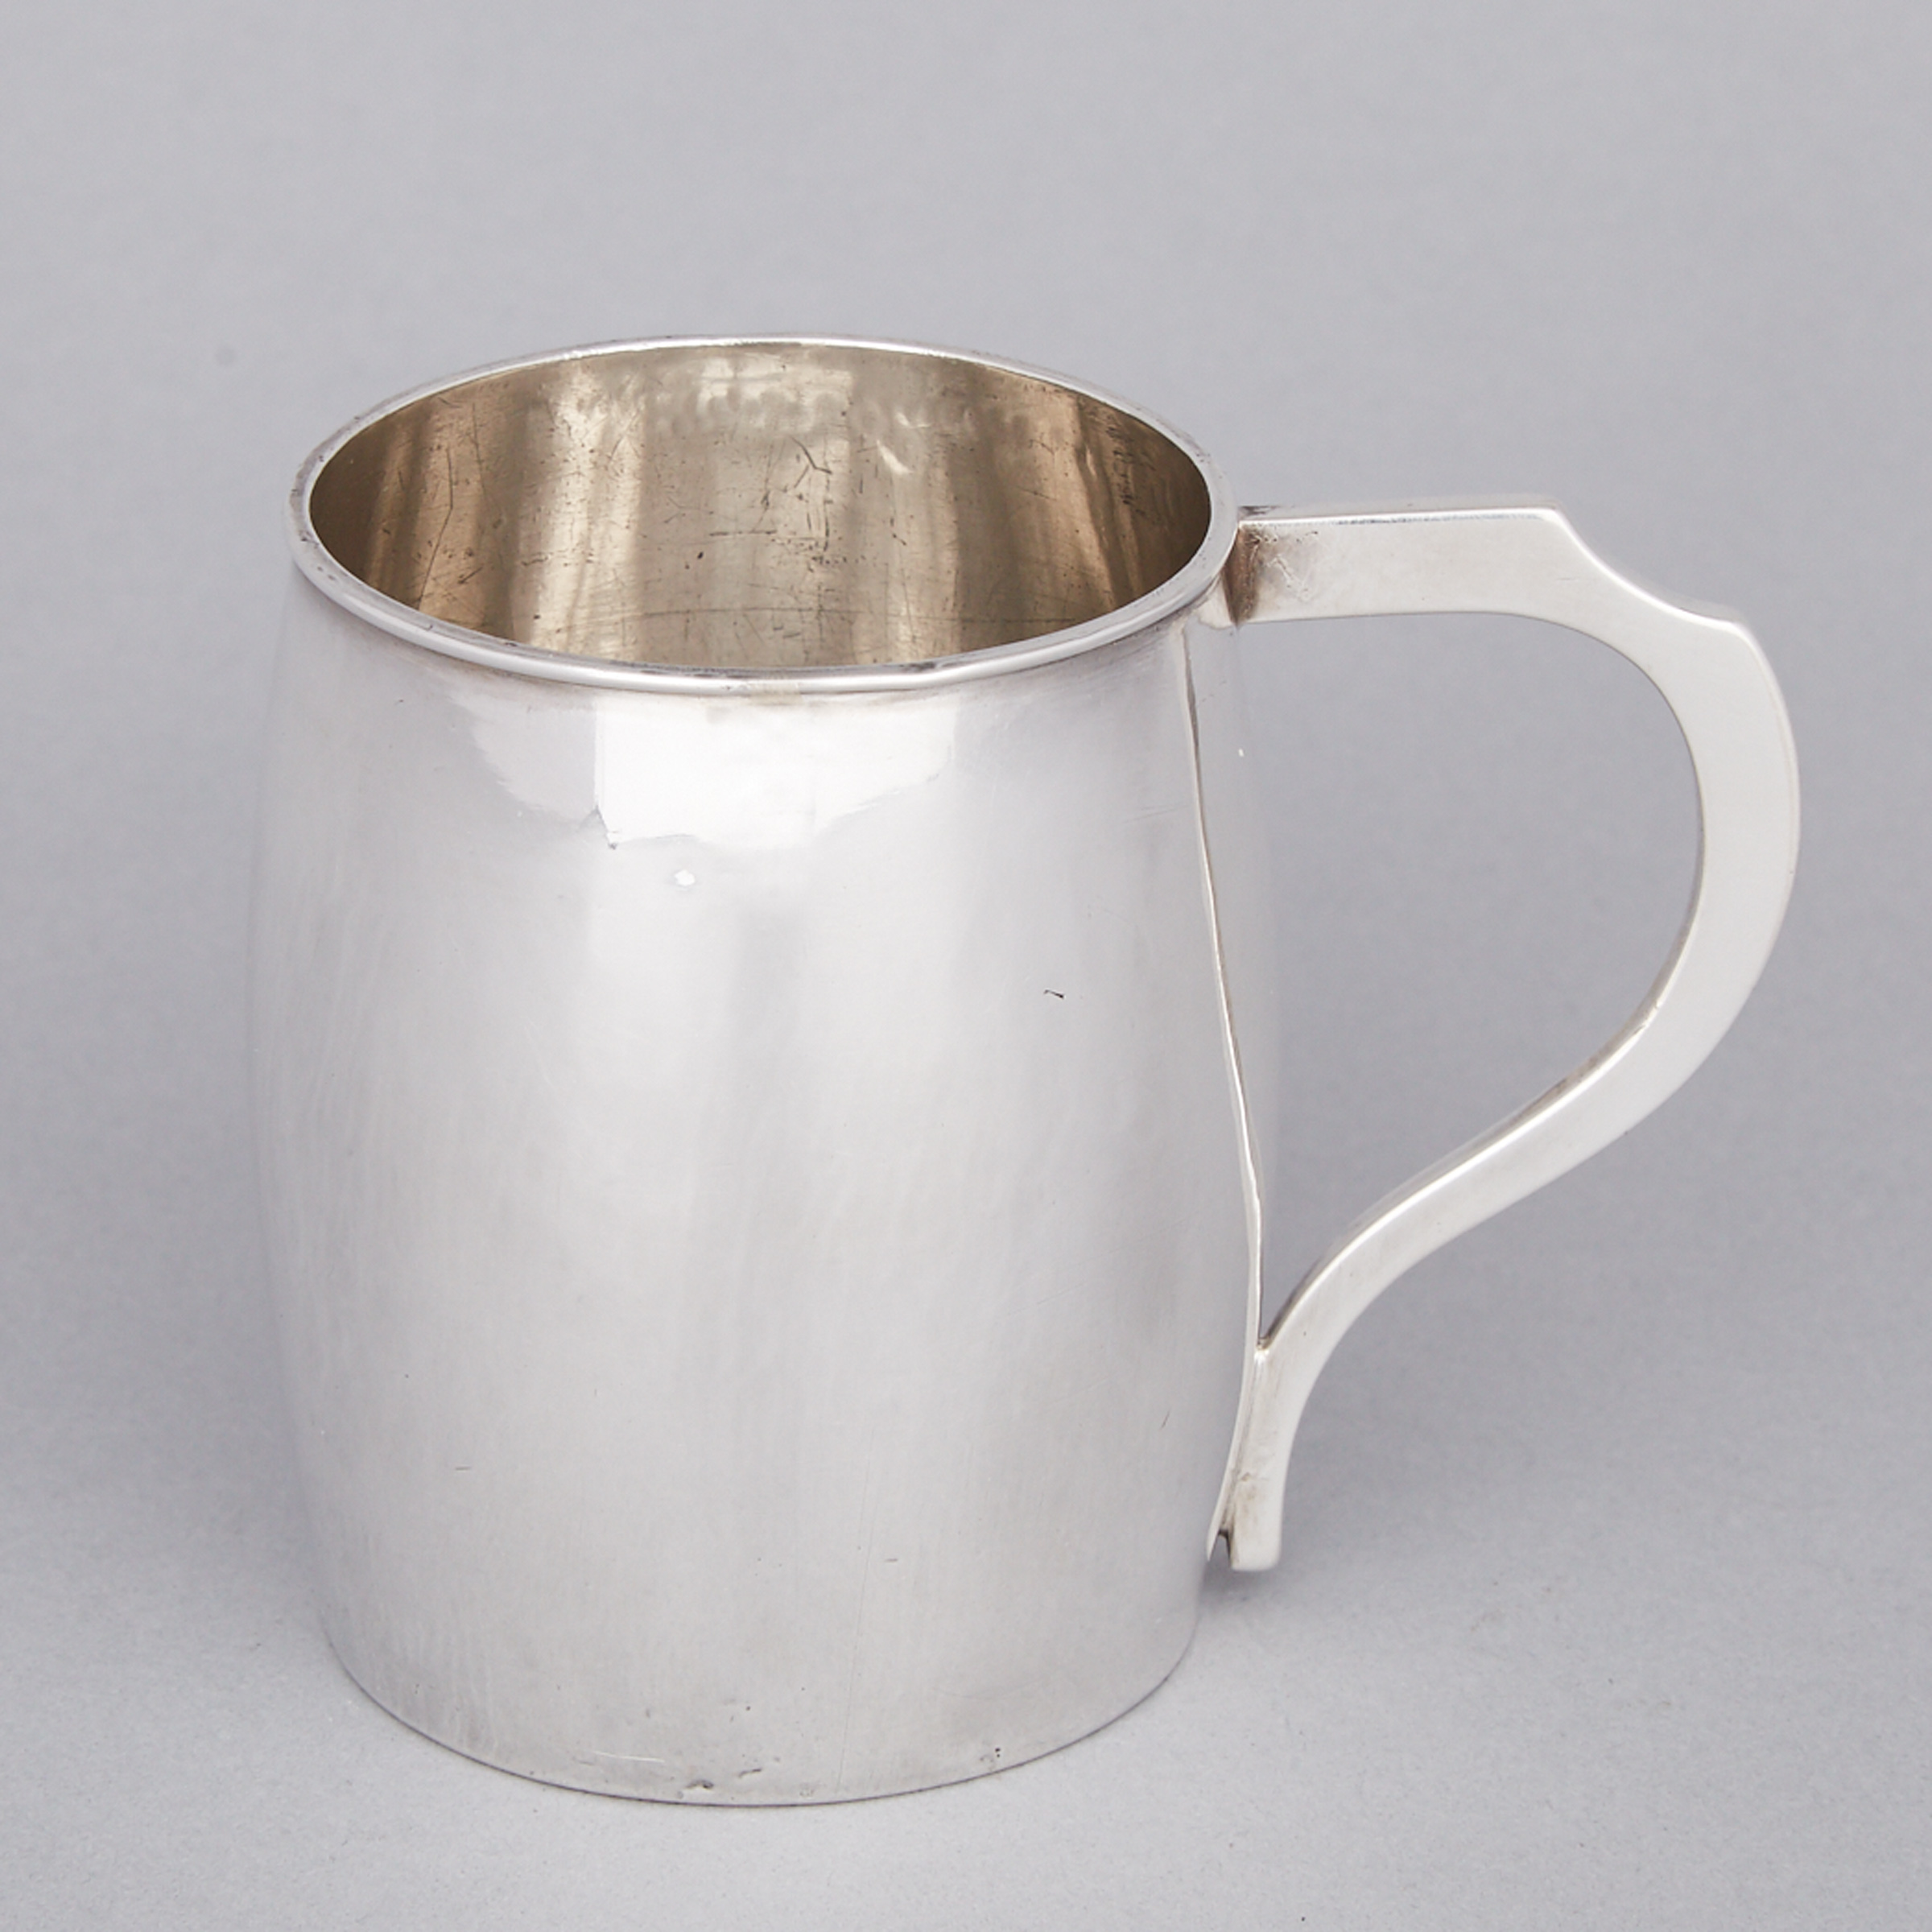 Canadian Silver Small Mug, Robert Cruickshank, Montreal, Que., c.1800